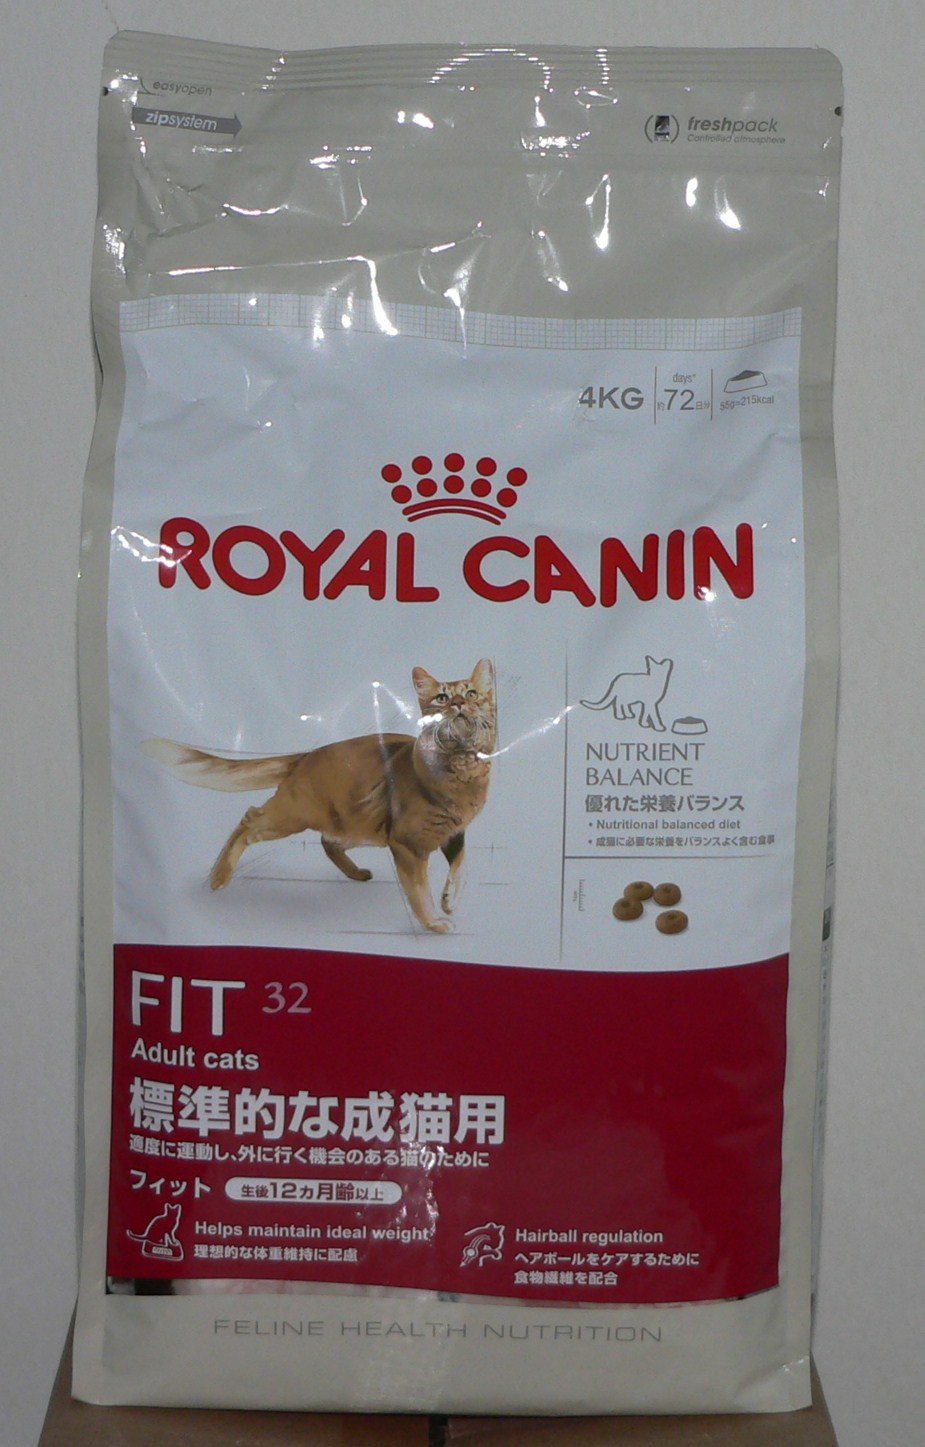 JN Cat Station: Royal Canin Cat Foods